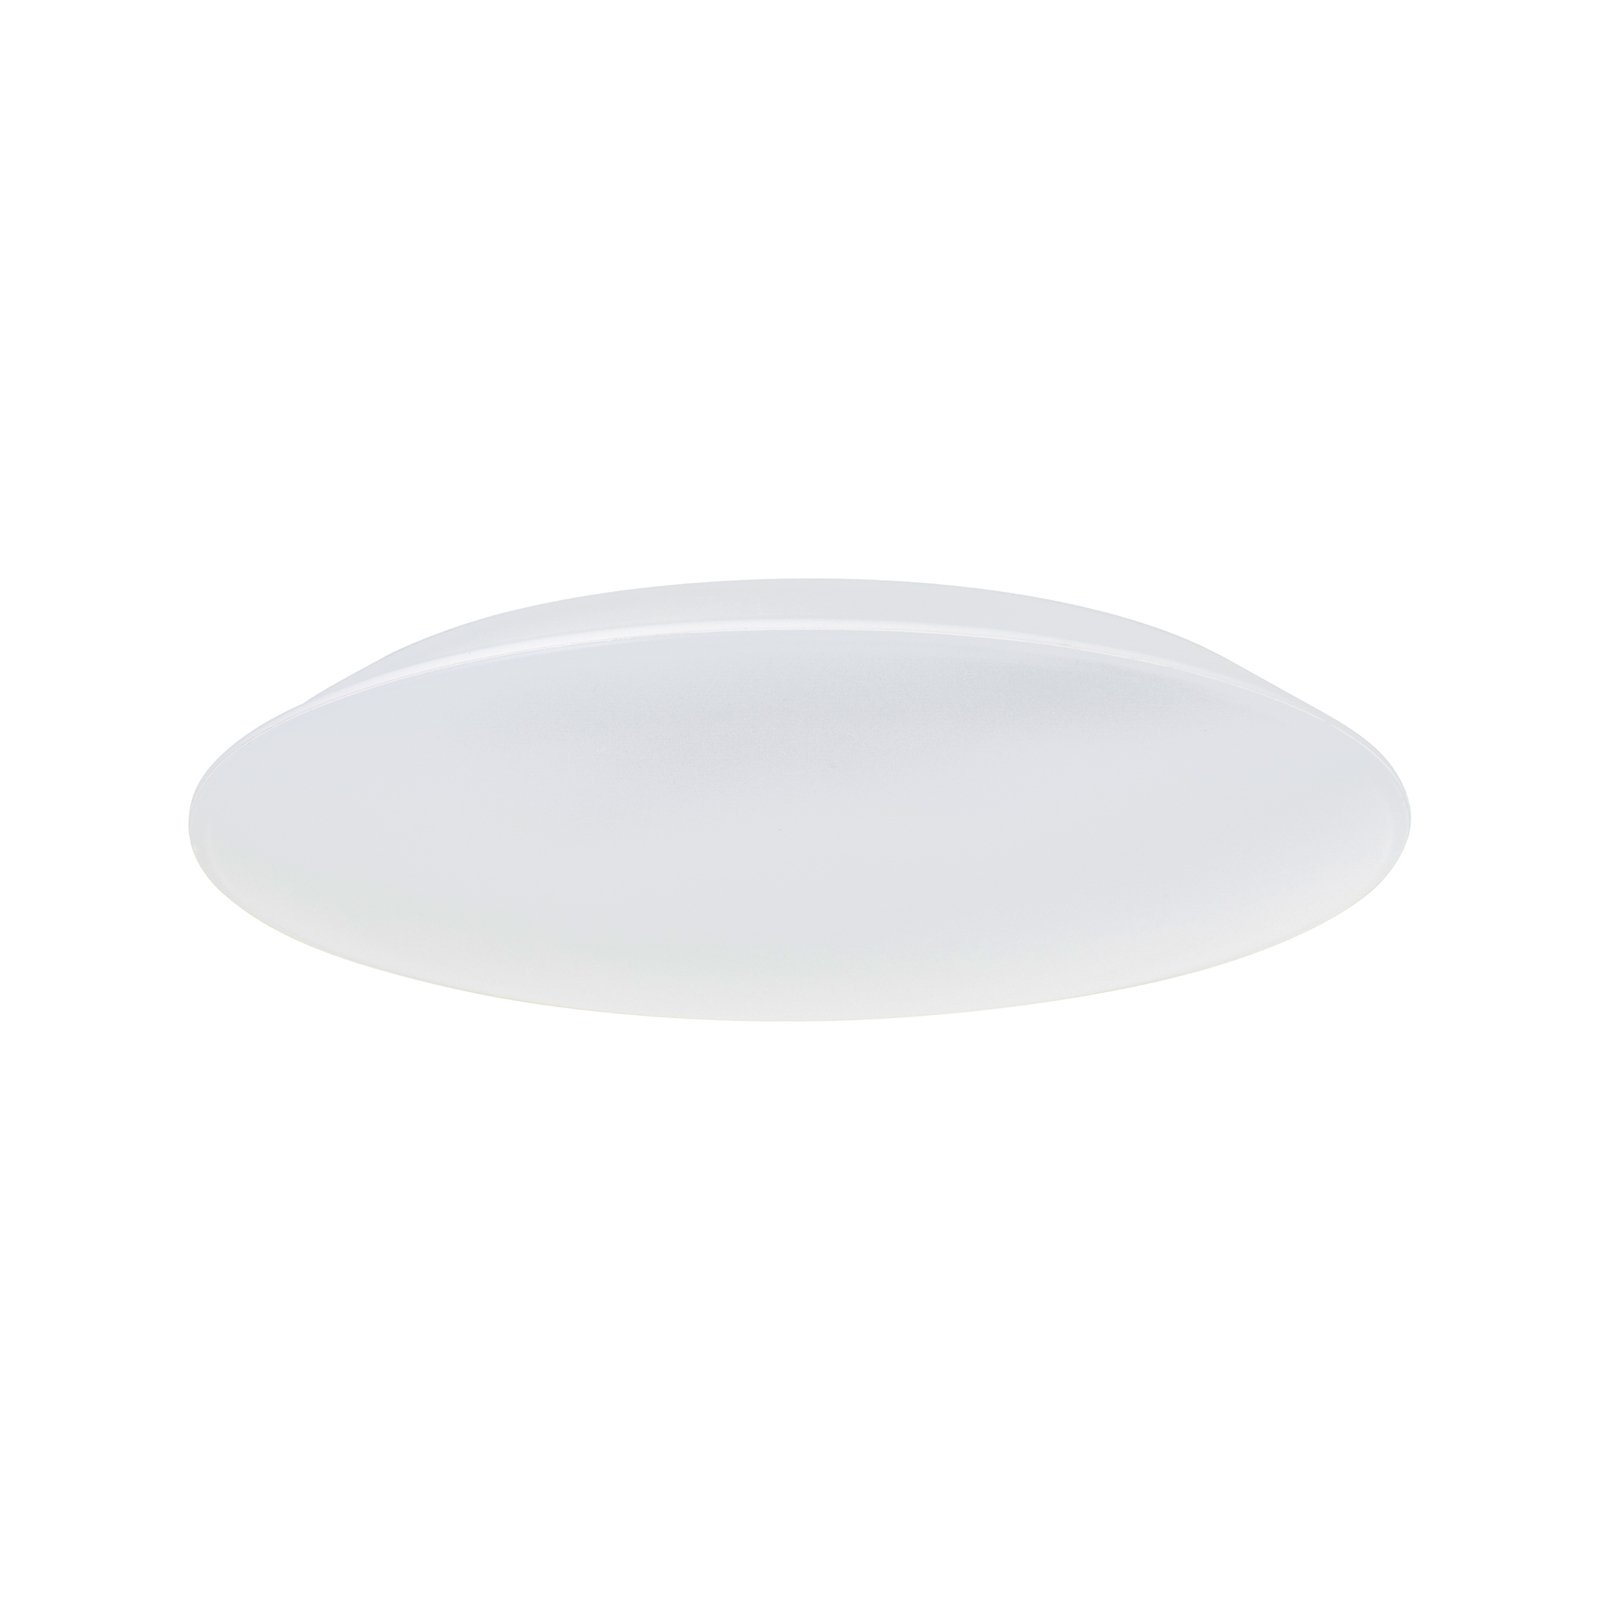 Plafón LED para baño Colden blanco on/off, Ø 29 cm